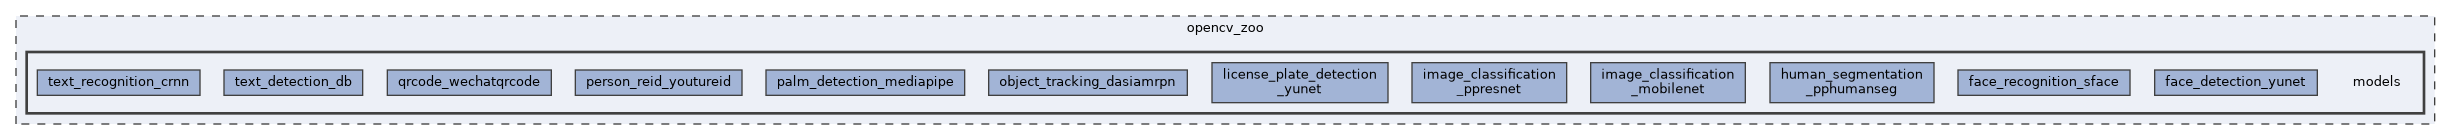 opencv_zoo/models